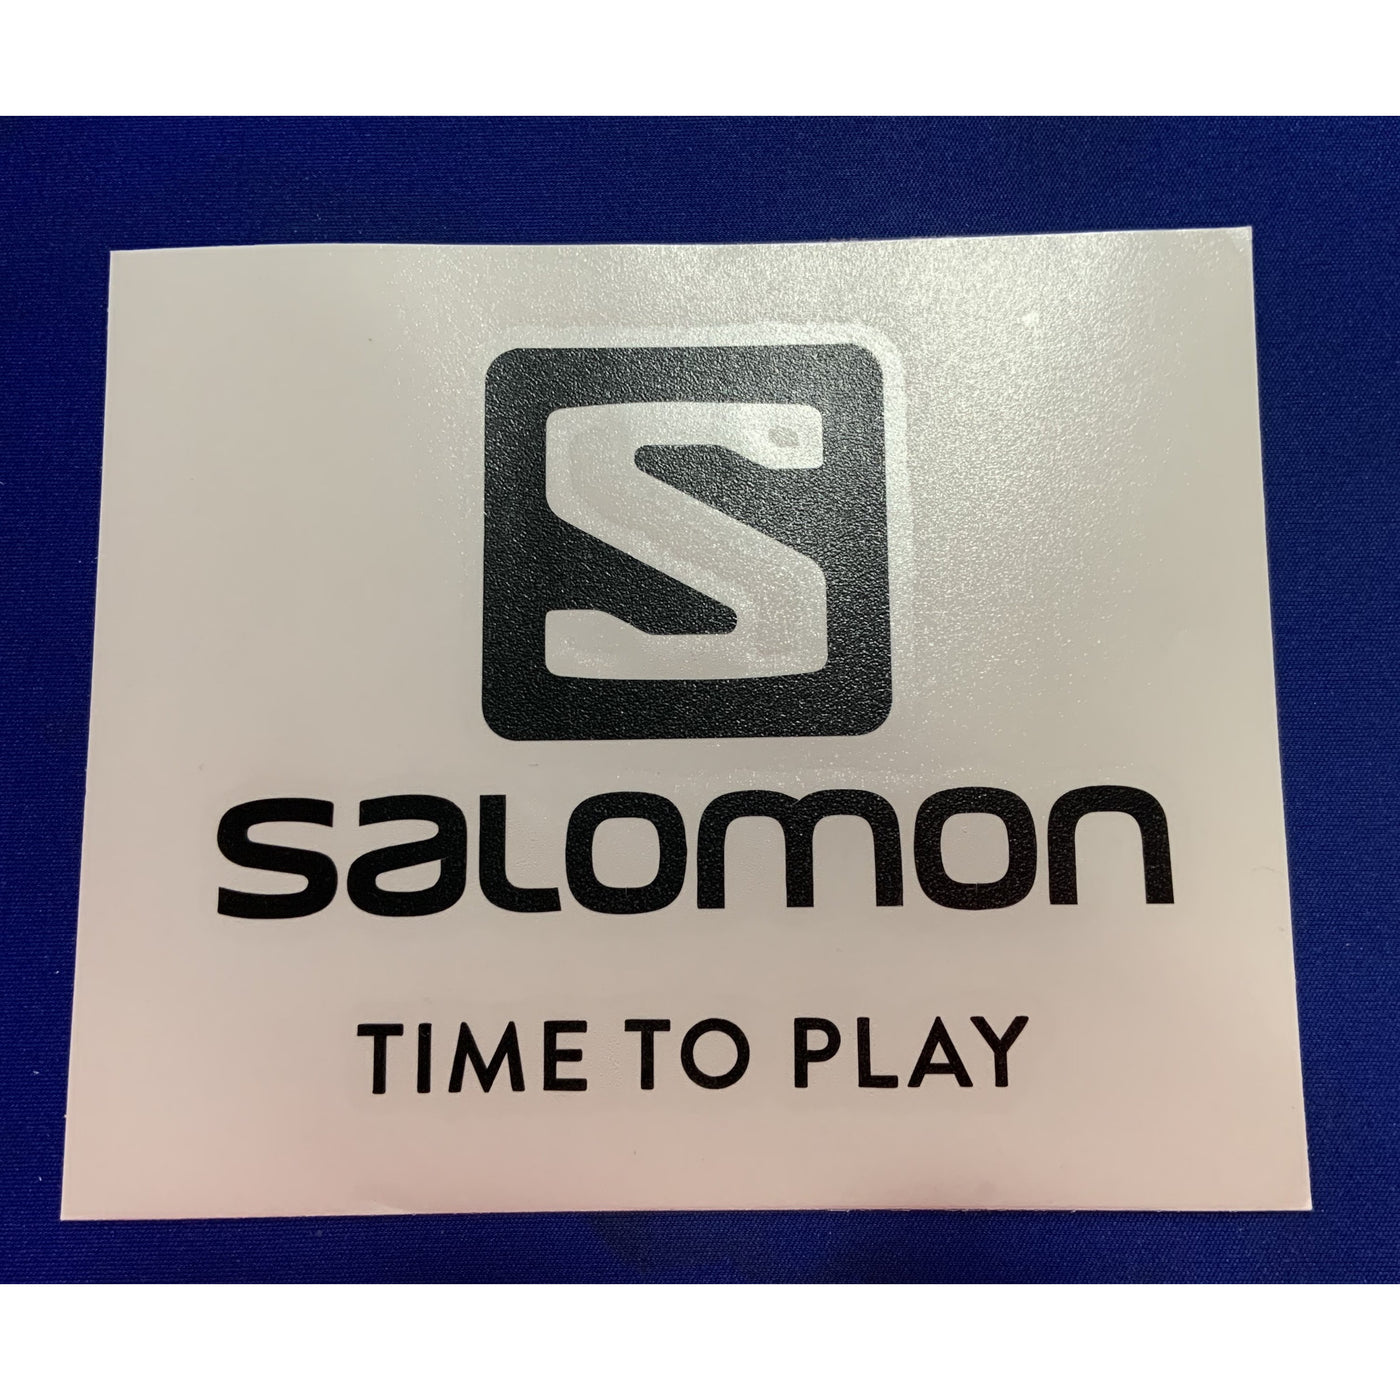 Salomon Time to Play Stickers